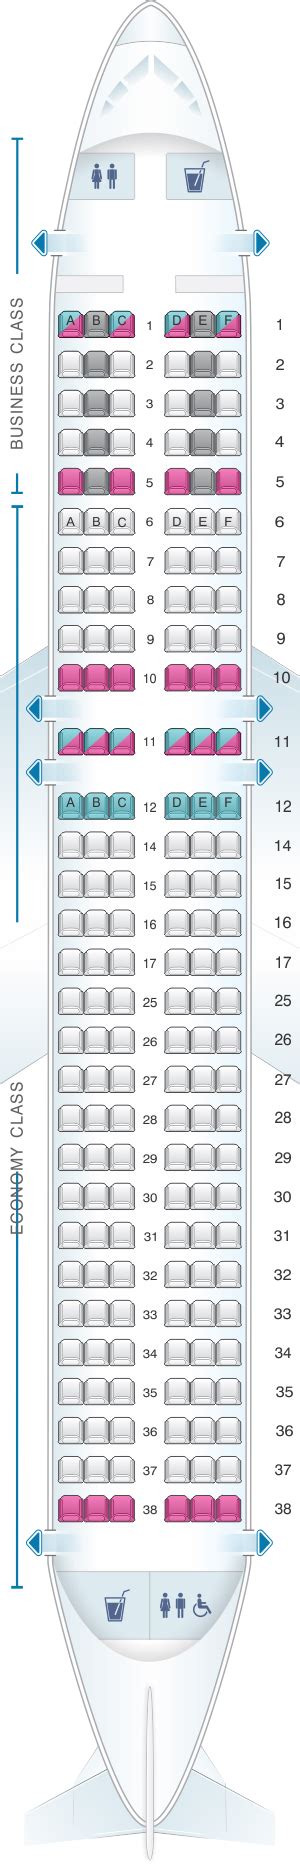 Airbus A320 200 Seat Map Image To U